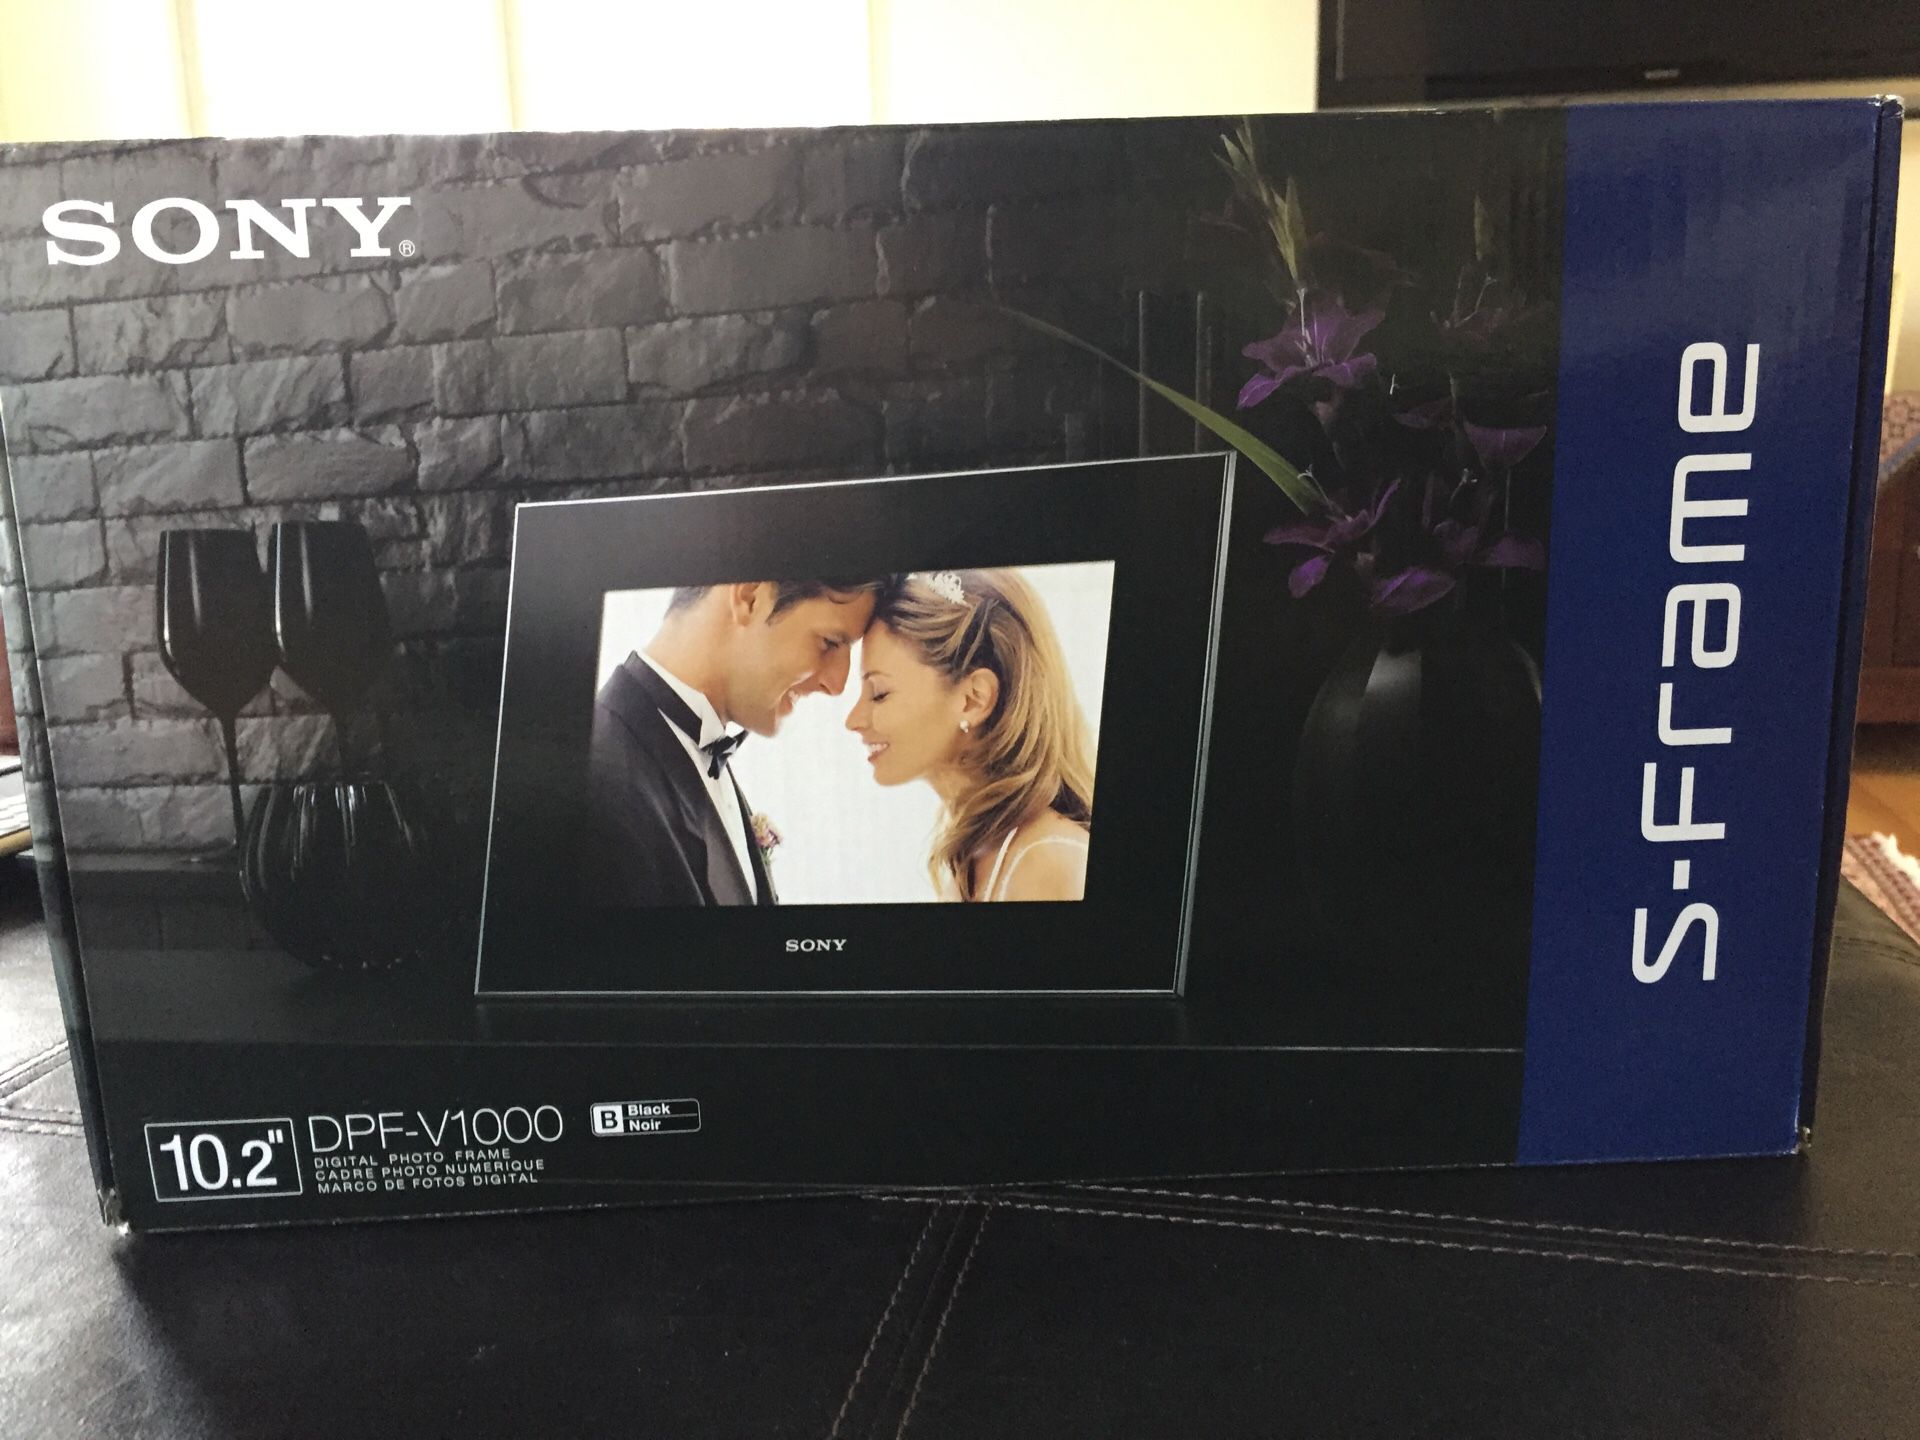 Sony digital photo frame